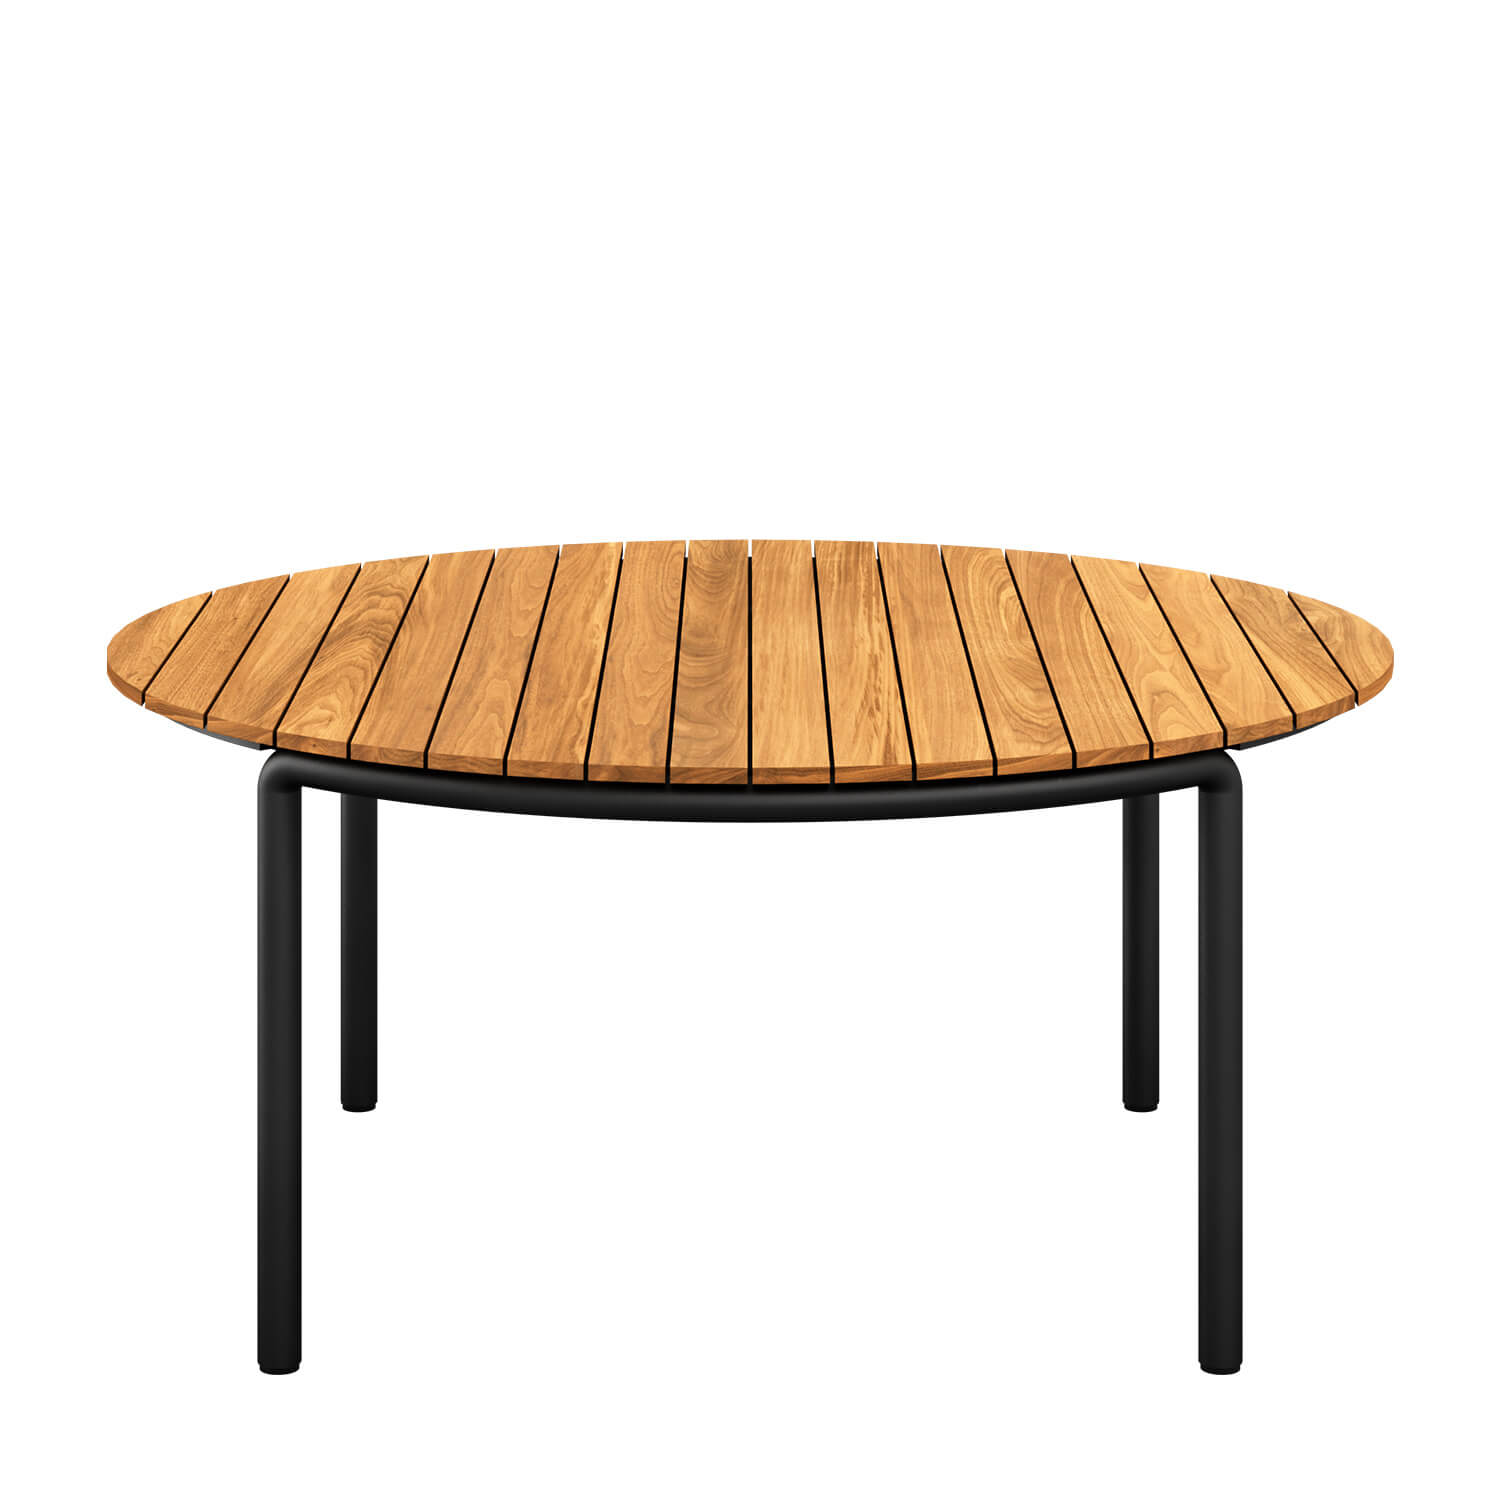 Patio dining table - round